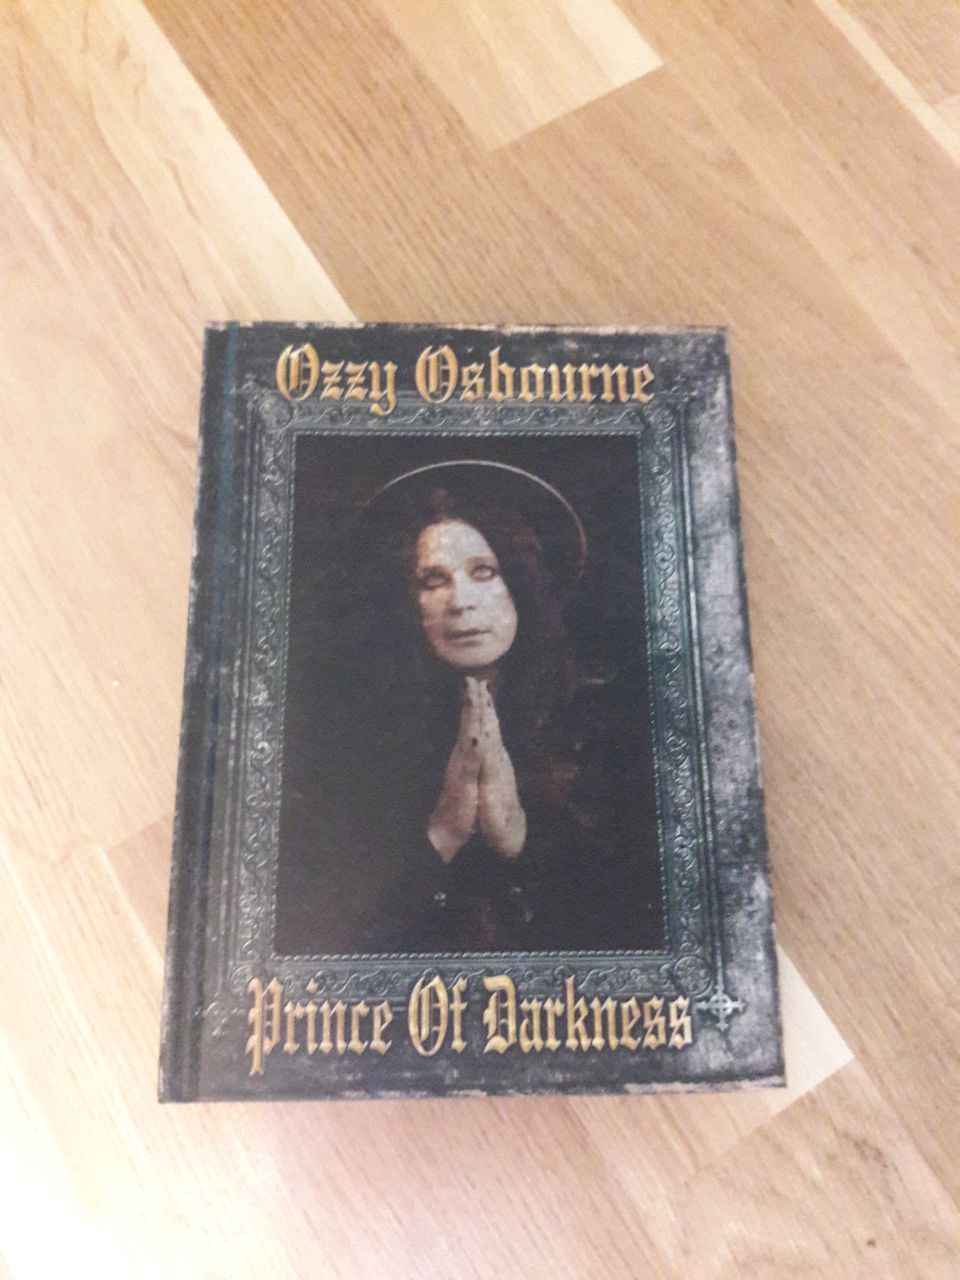 Ozzy osbourne Prince of Darkness 4cd